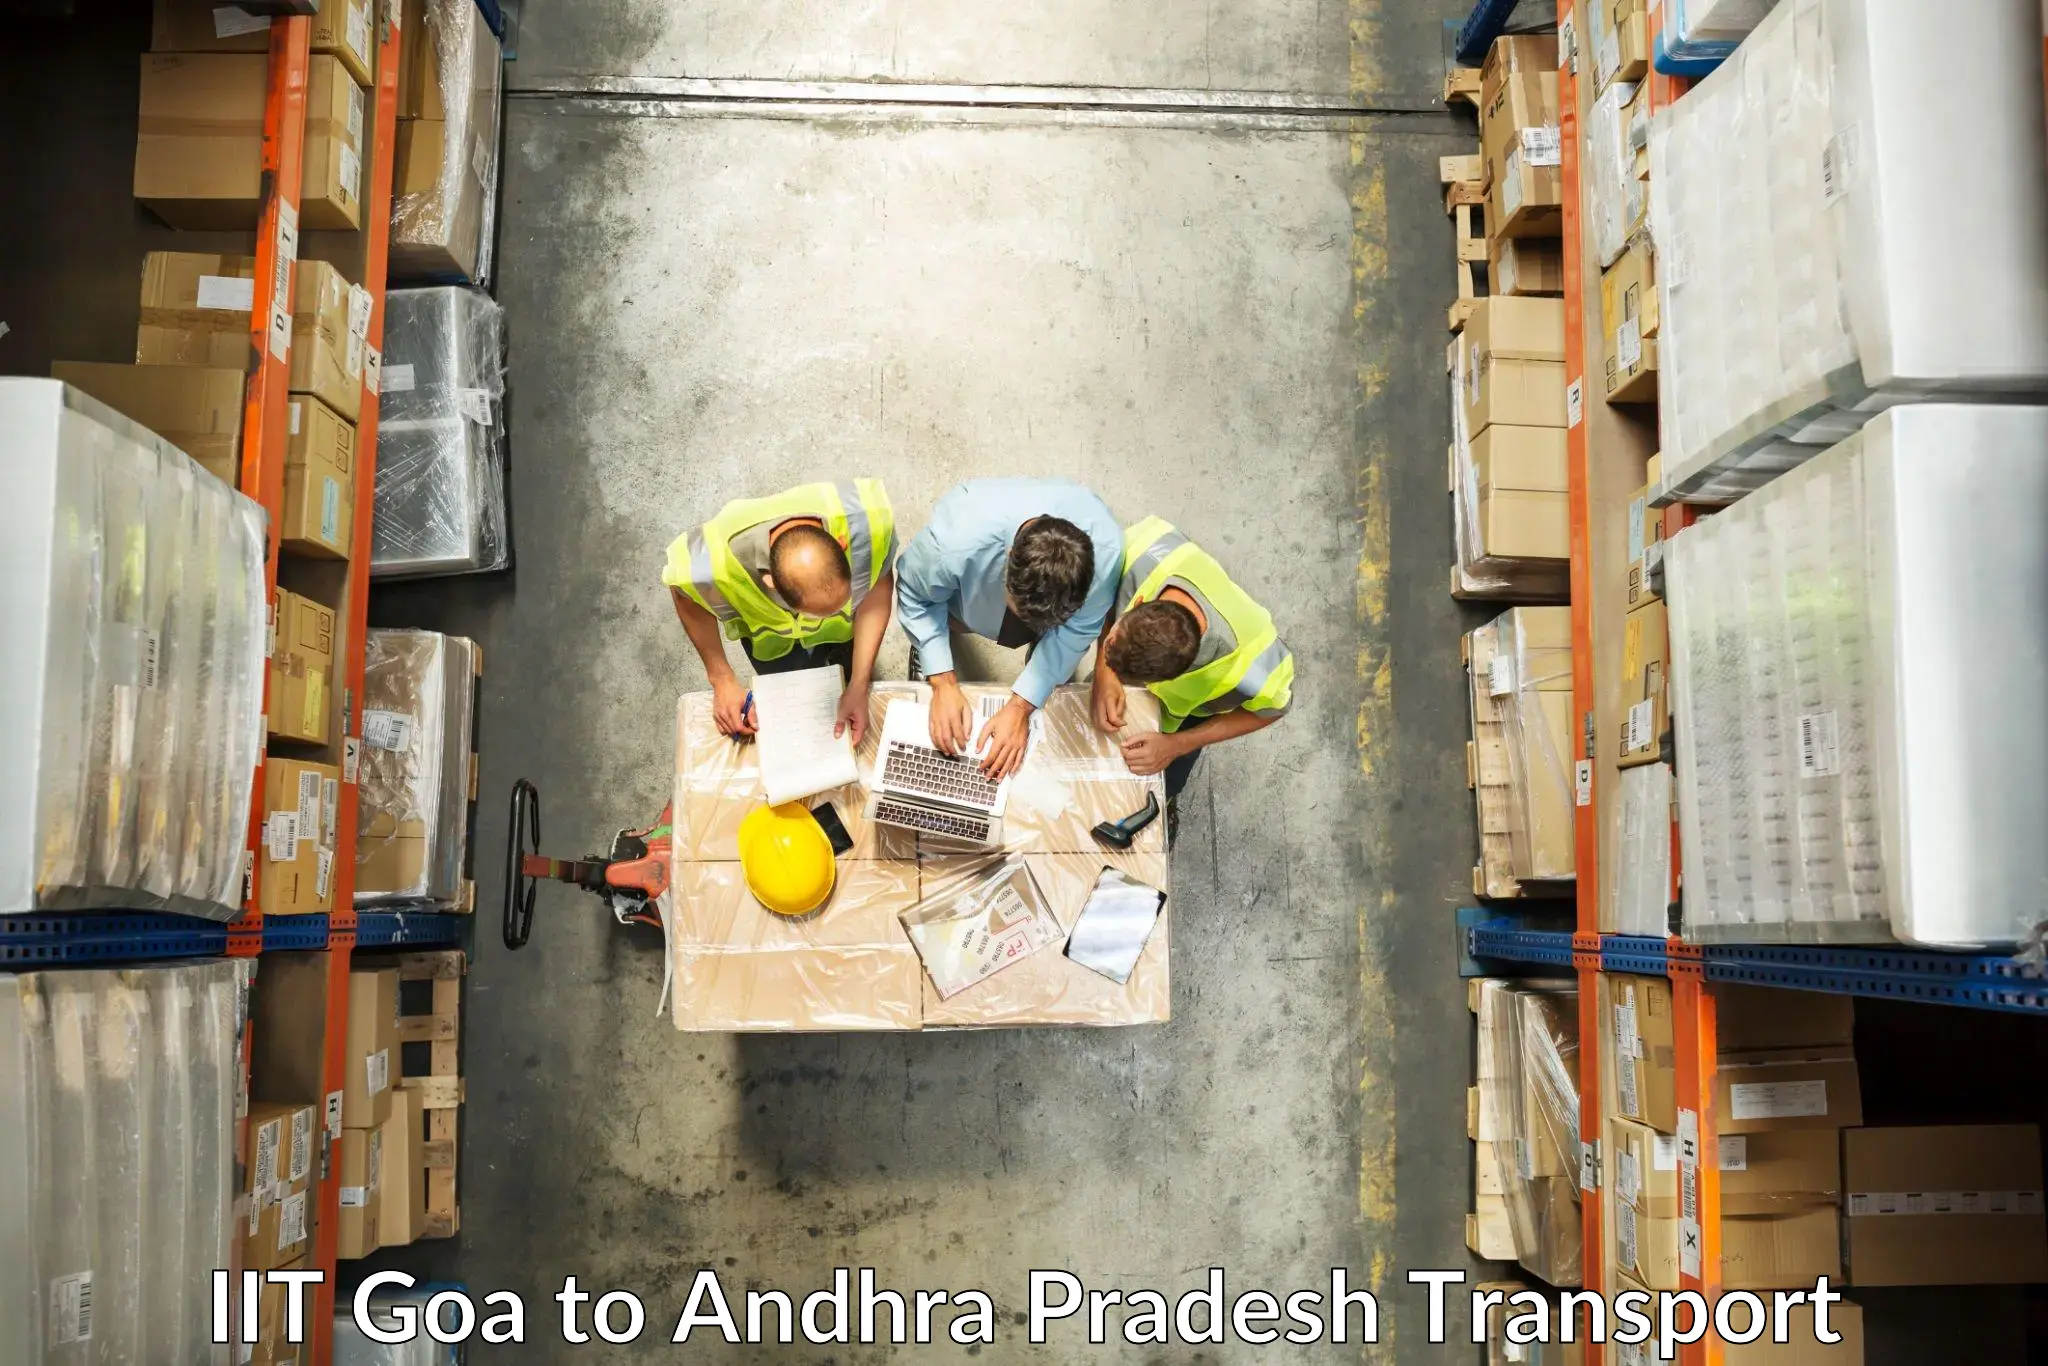 Commercial transport service IIT Goa to Tripuranthakam